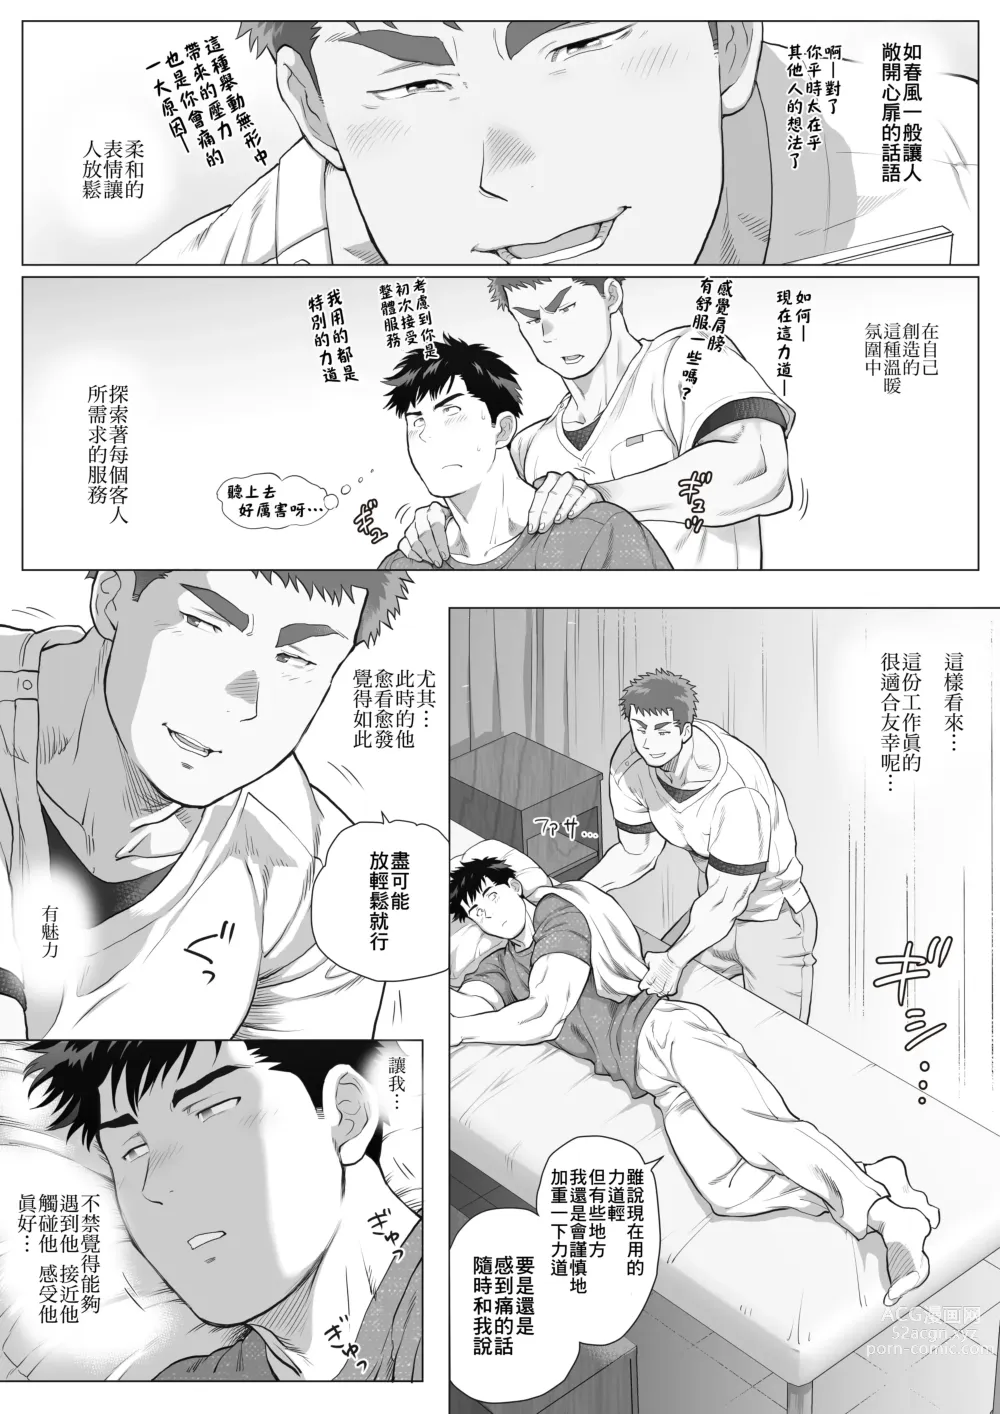 Page 6 of manga 直人爸爸与友幸爸爸 第四话